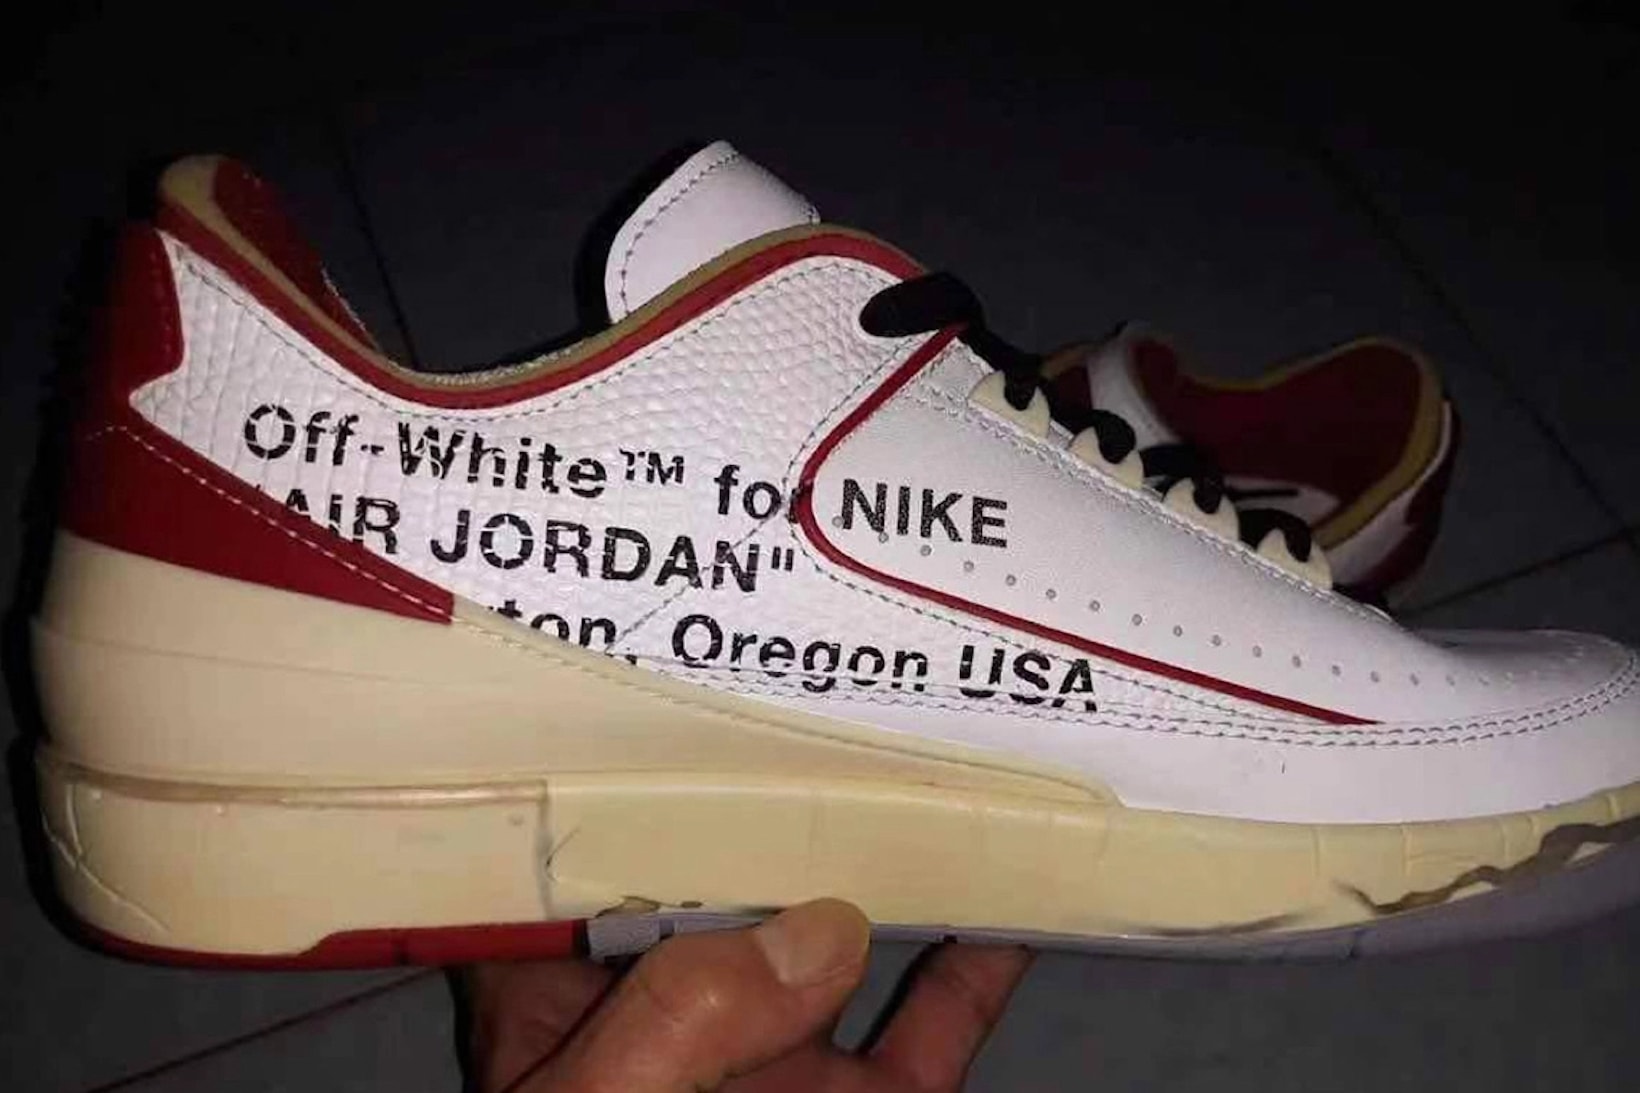 nike off white air jordan 2 aj2 low collaboration sneakers white black virgil abloh footwear shoes kicks